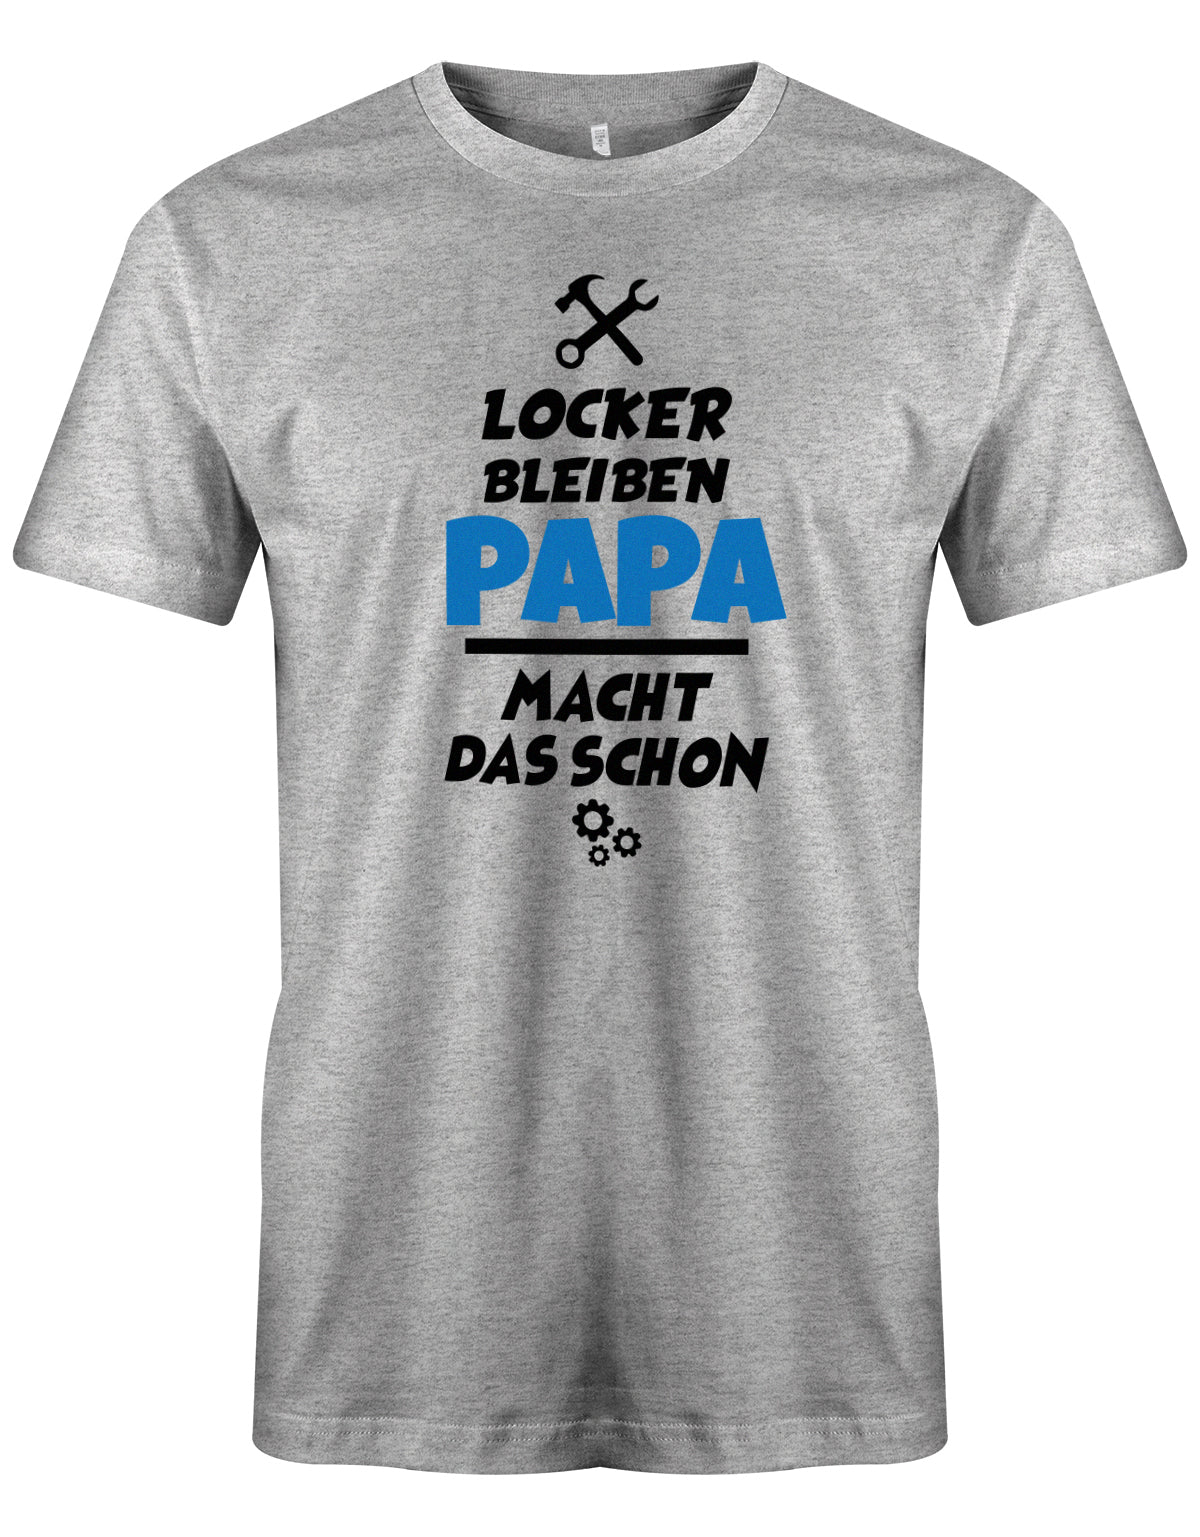 Papa T-Shirt - Locker bleiben Papa macht das schon Grau